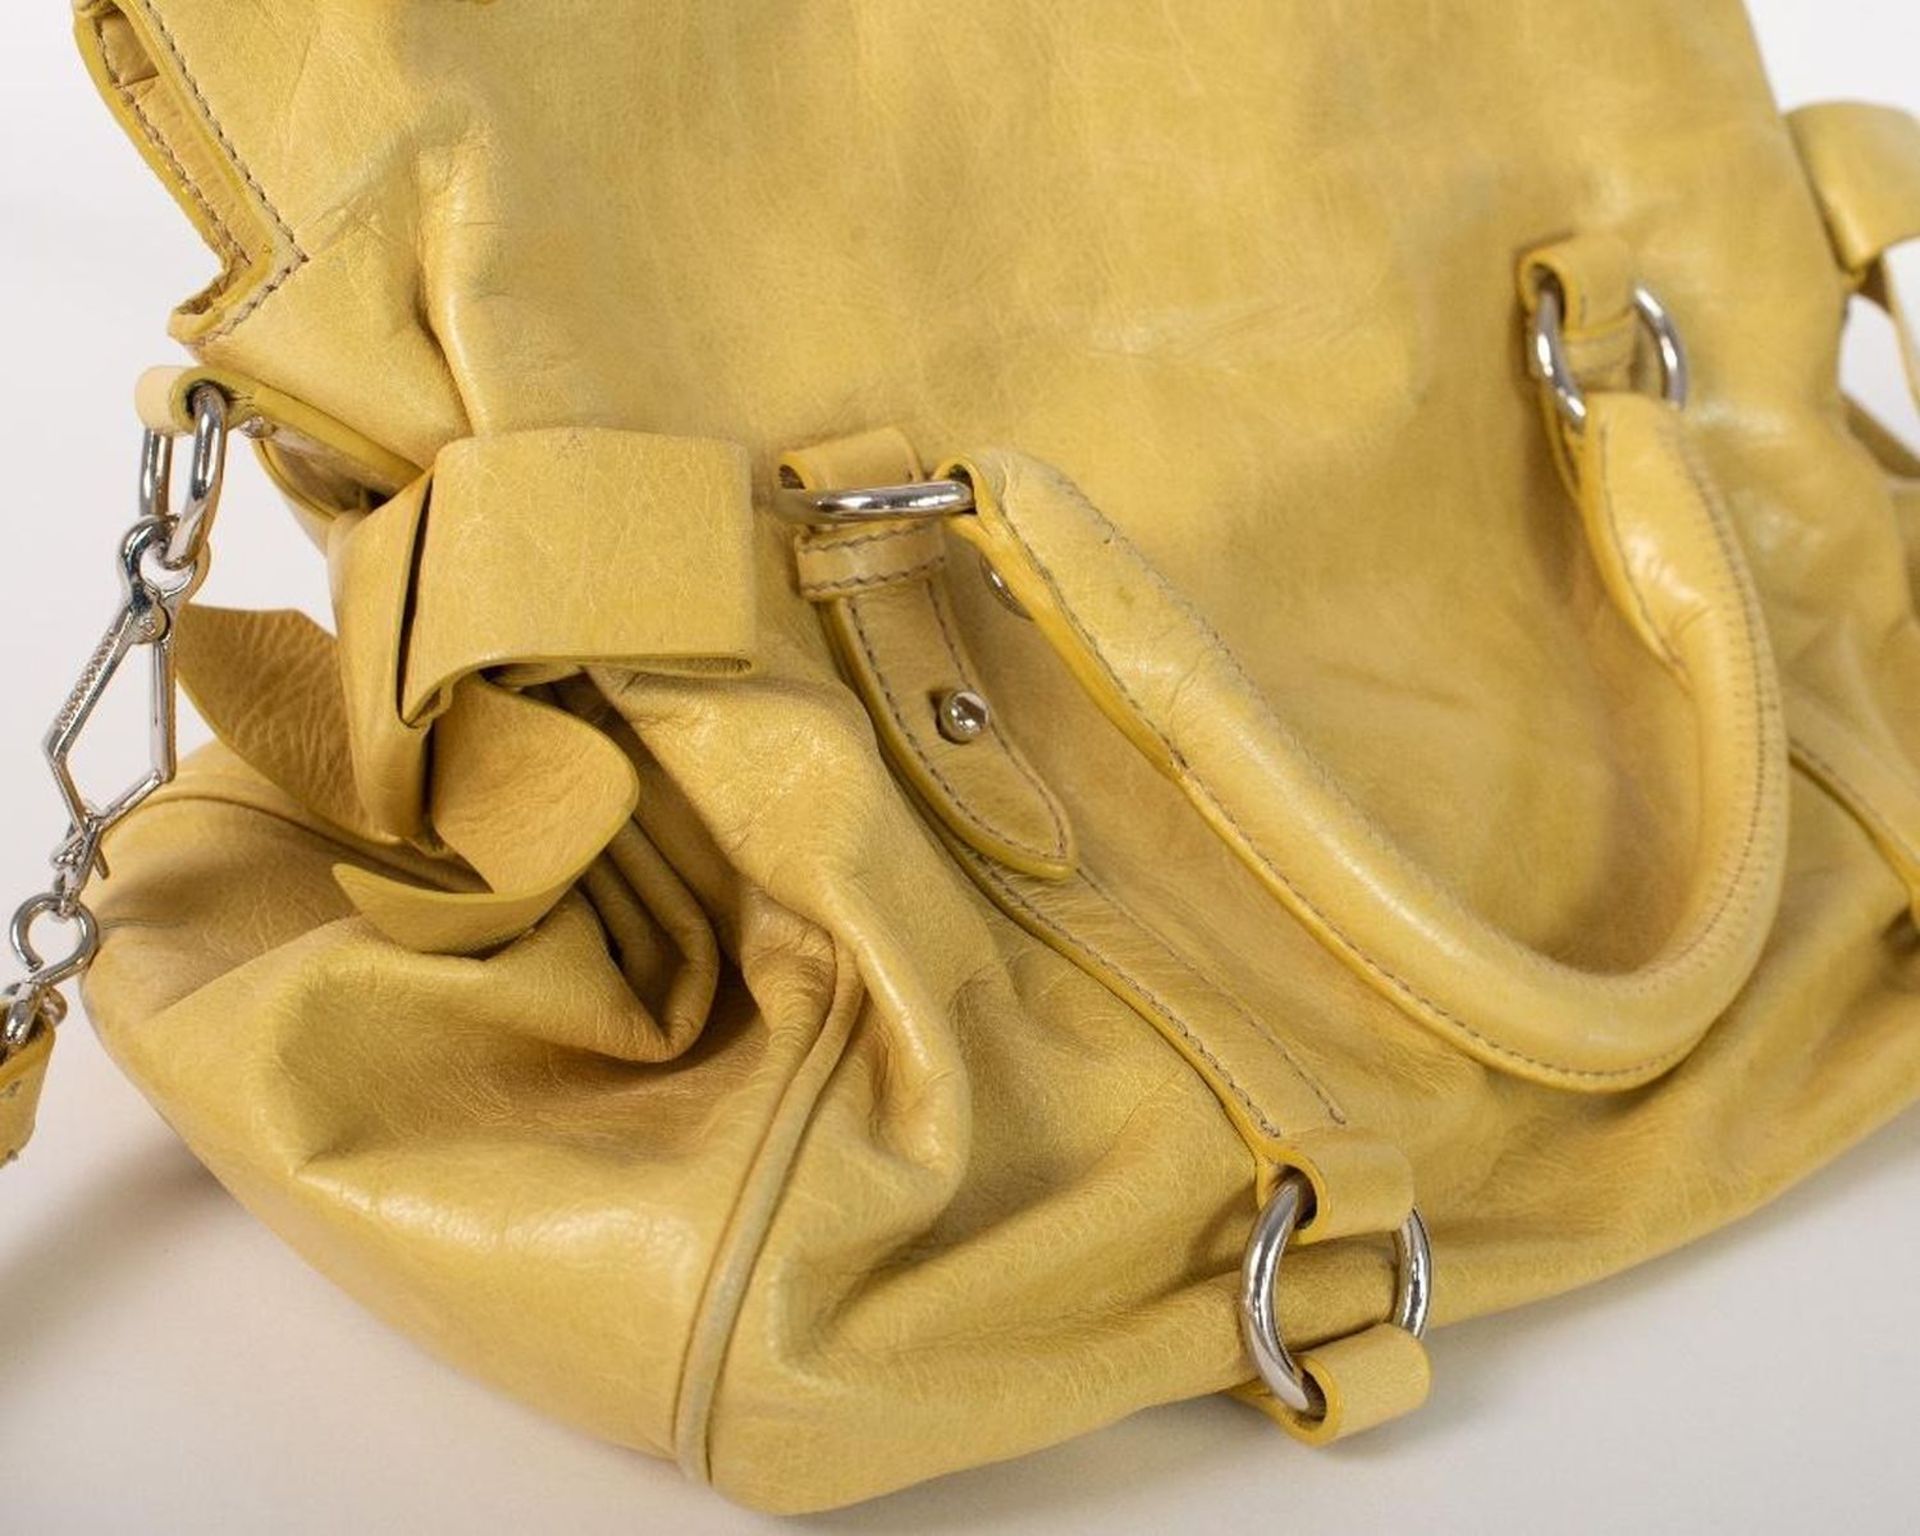 Miu Miu Vitello Lux Yellow Leather Handbag - Image 15 of 23